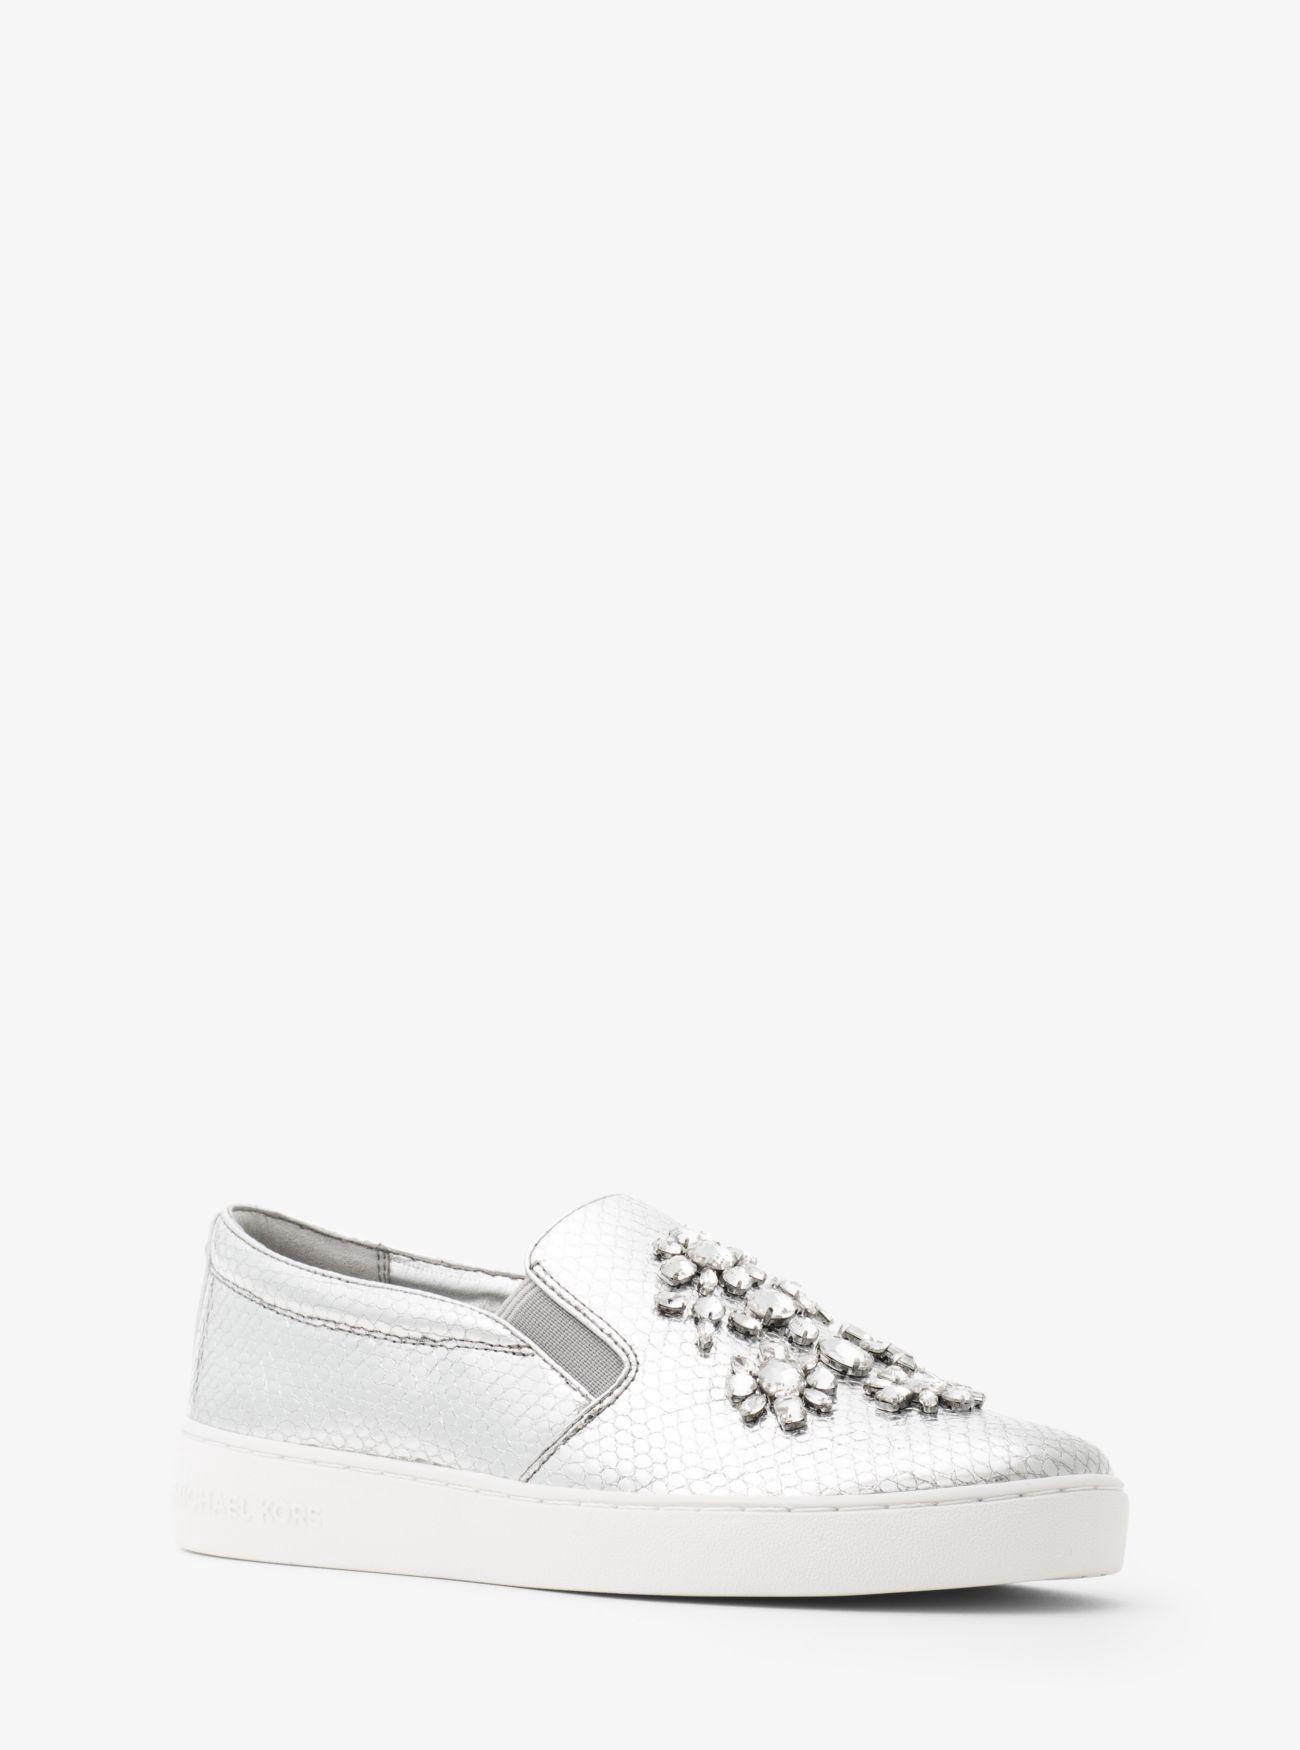 Michael Kors Keaton Embellished Metallic Leather Slip-on Sneaker In Silver  | ModeSens